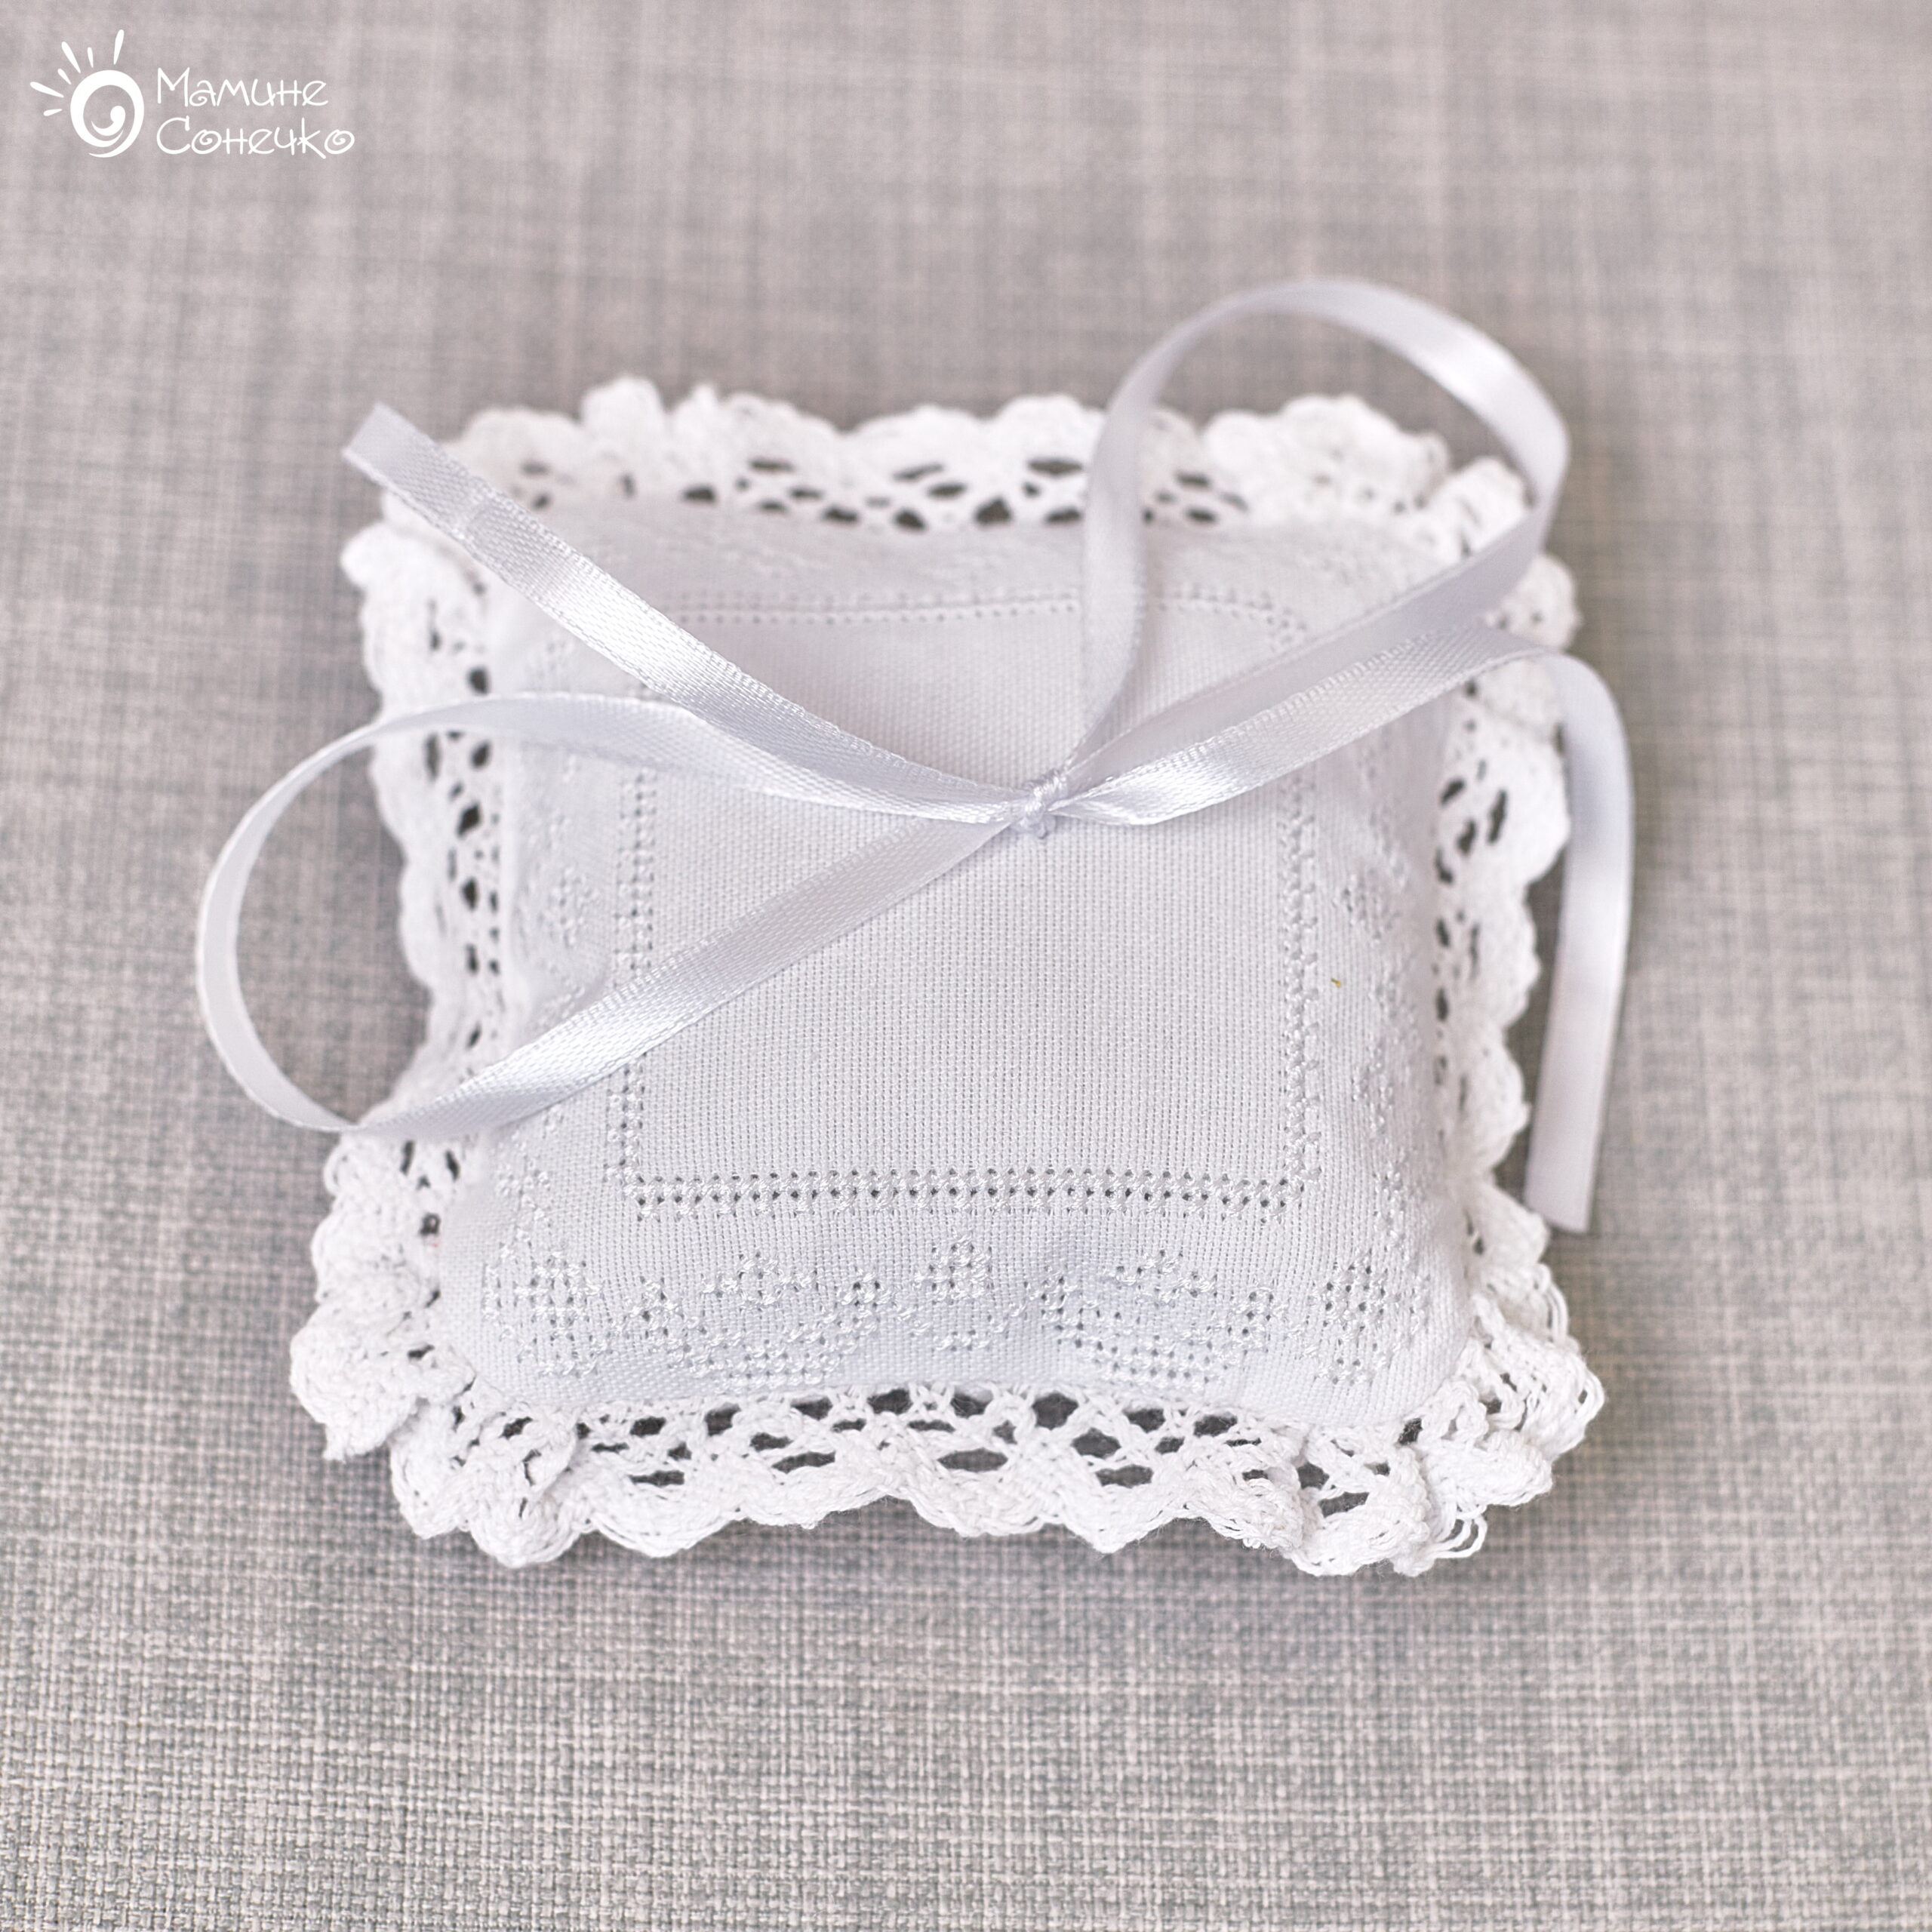 Cross stitch pad “White monochrome”, linen